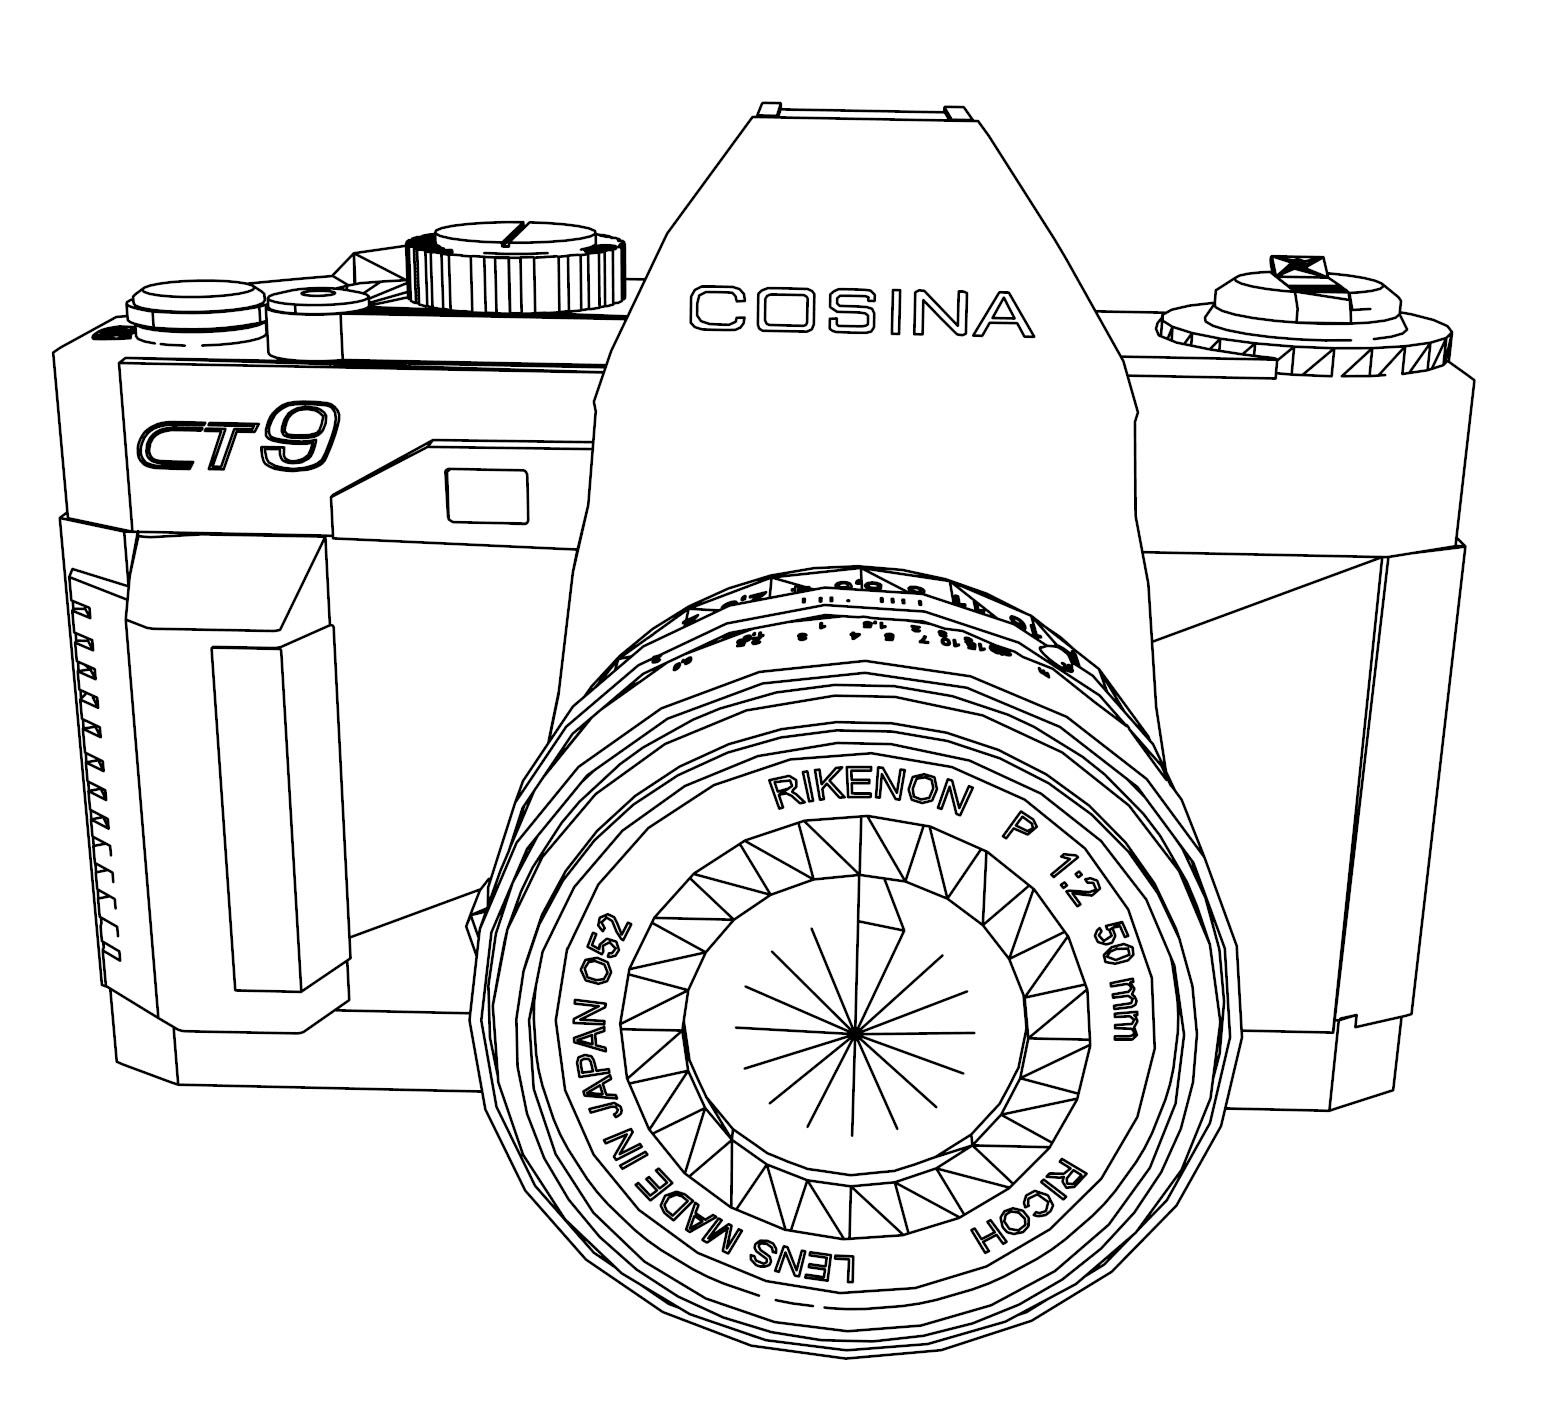 COSINA Camera Coloring Page | Wecoloringpage